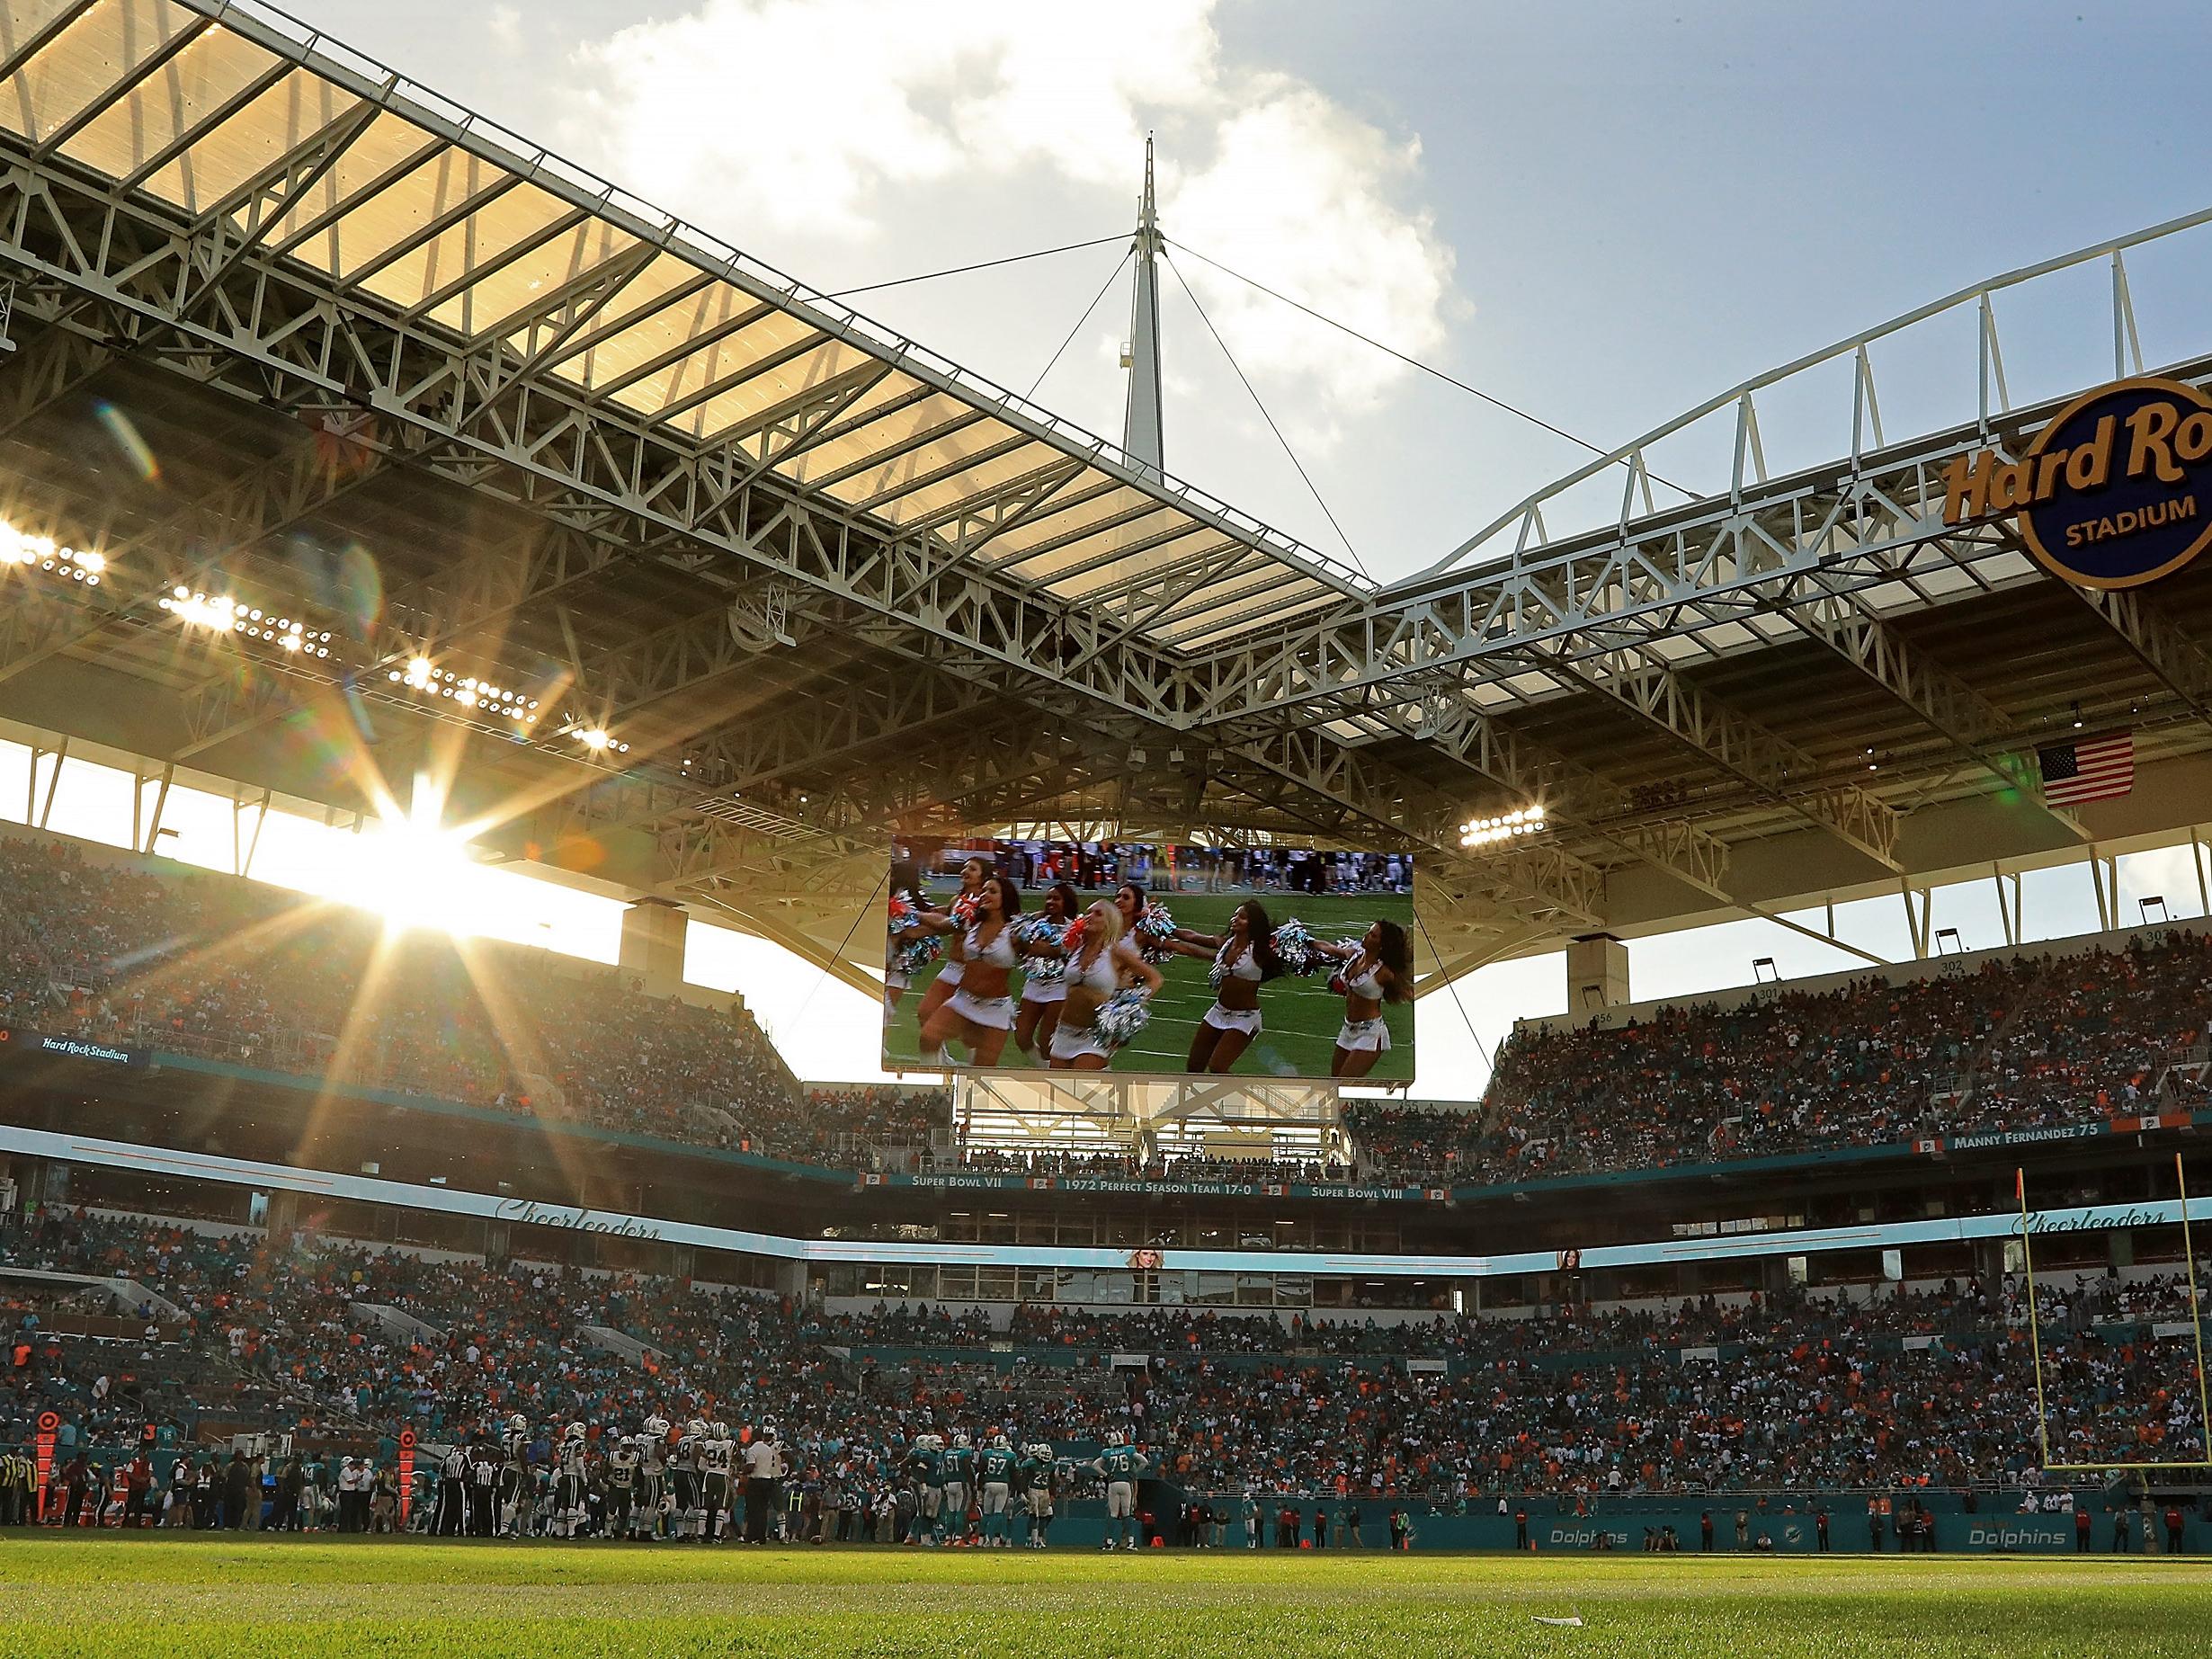 Hard Rock Stadium in Miami will host the La Liga fixture